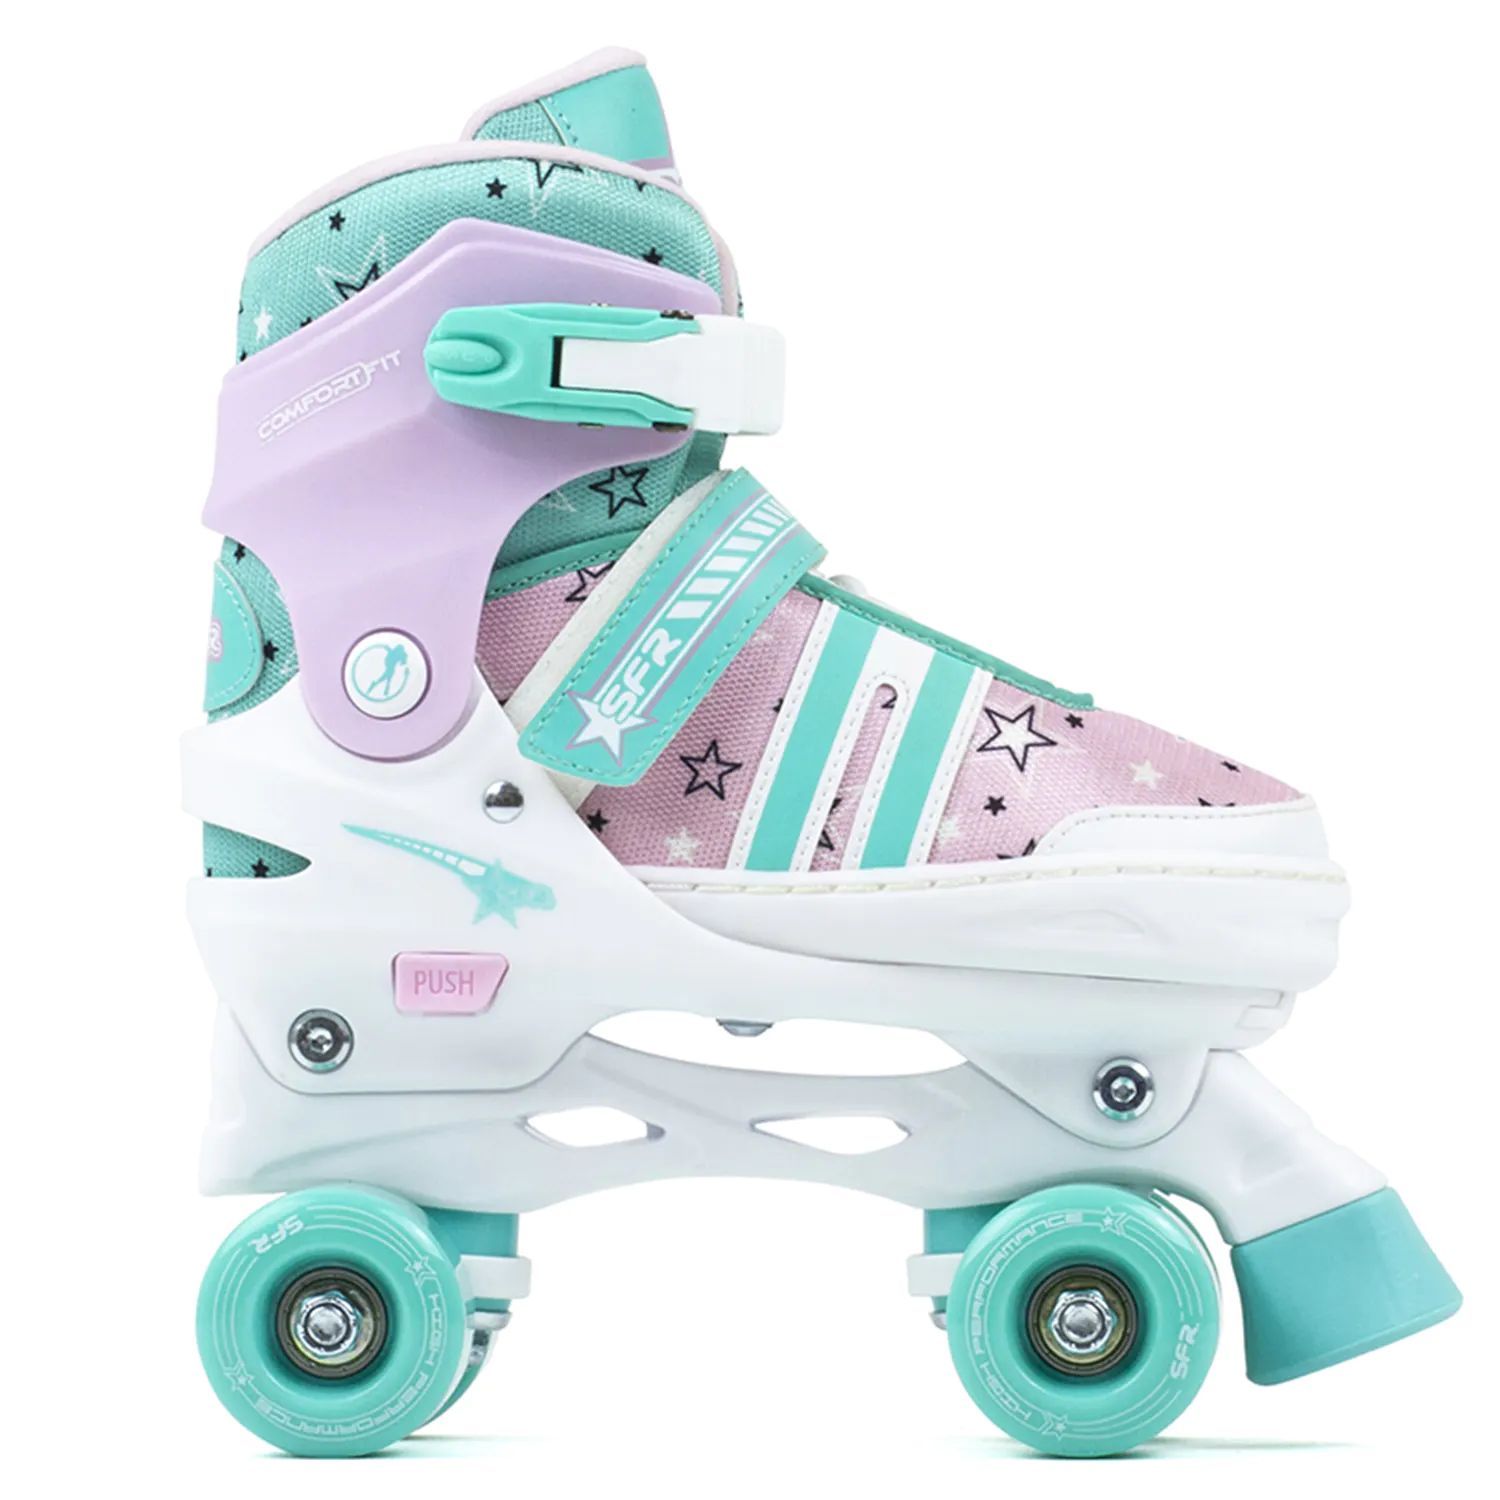 Gioventù Sfr Skates SFR Spectra Adjustable Quad Skates Pattini Pattini Unisex Bambini Pink/Green 29-33 